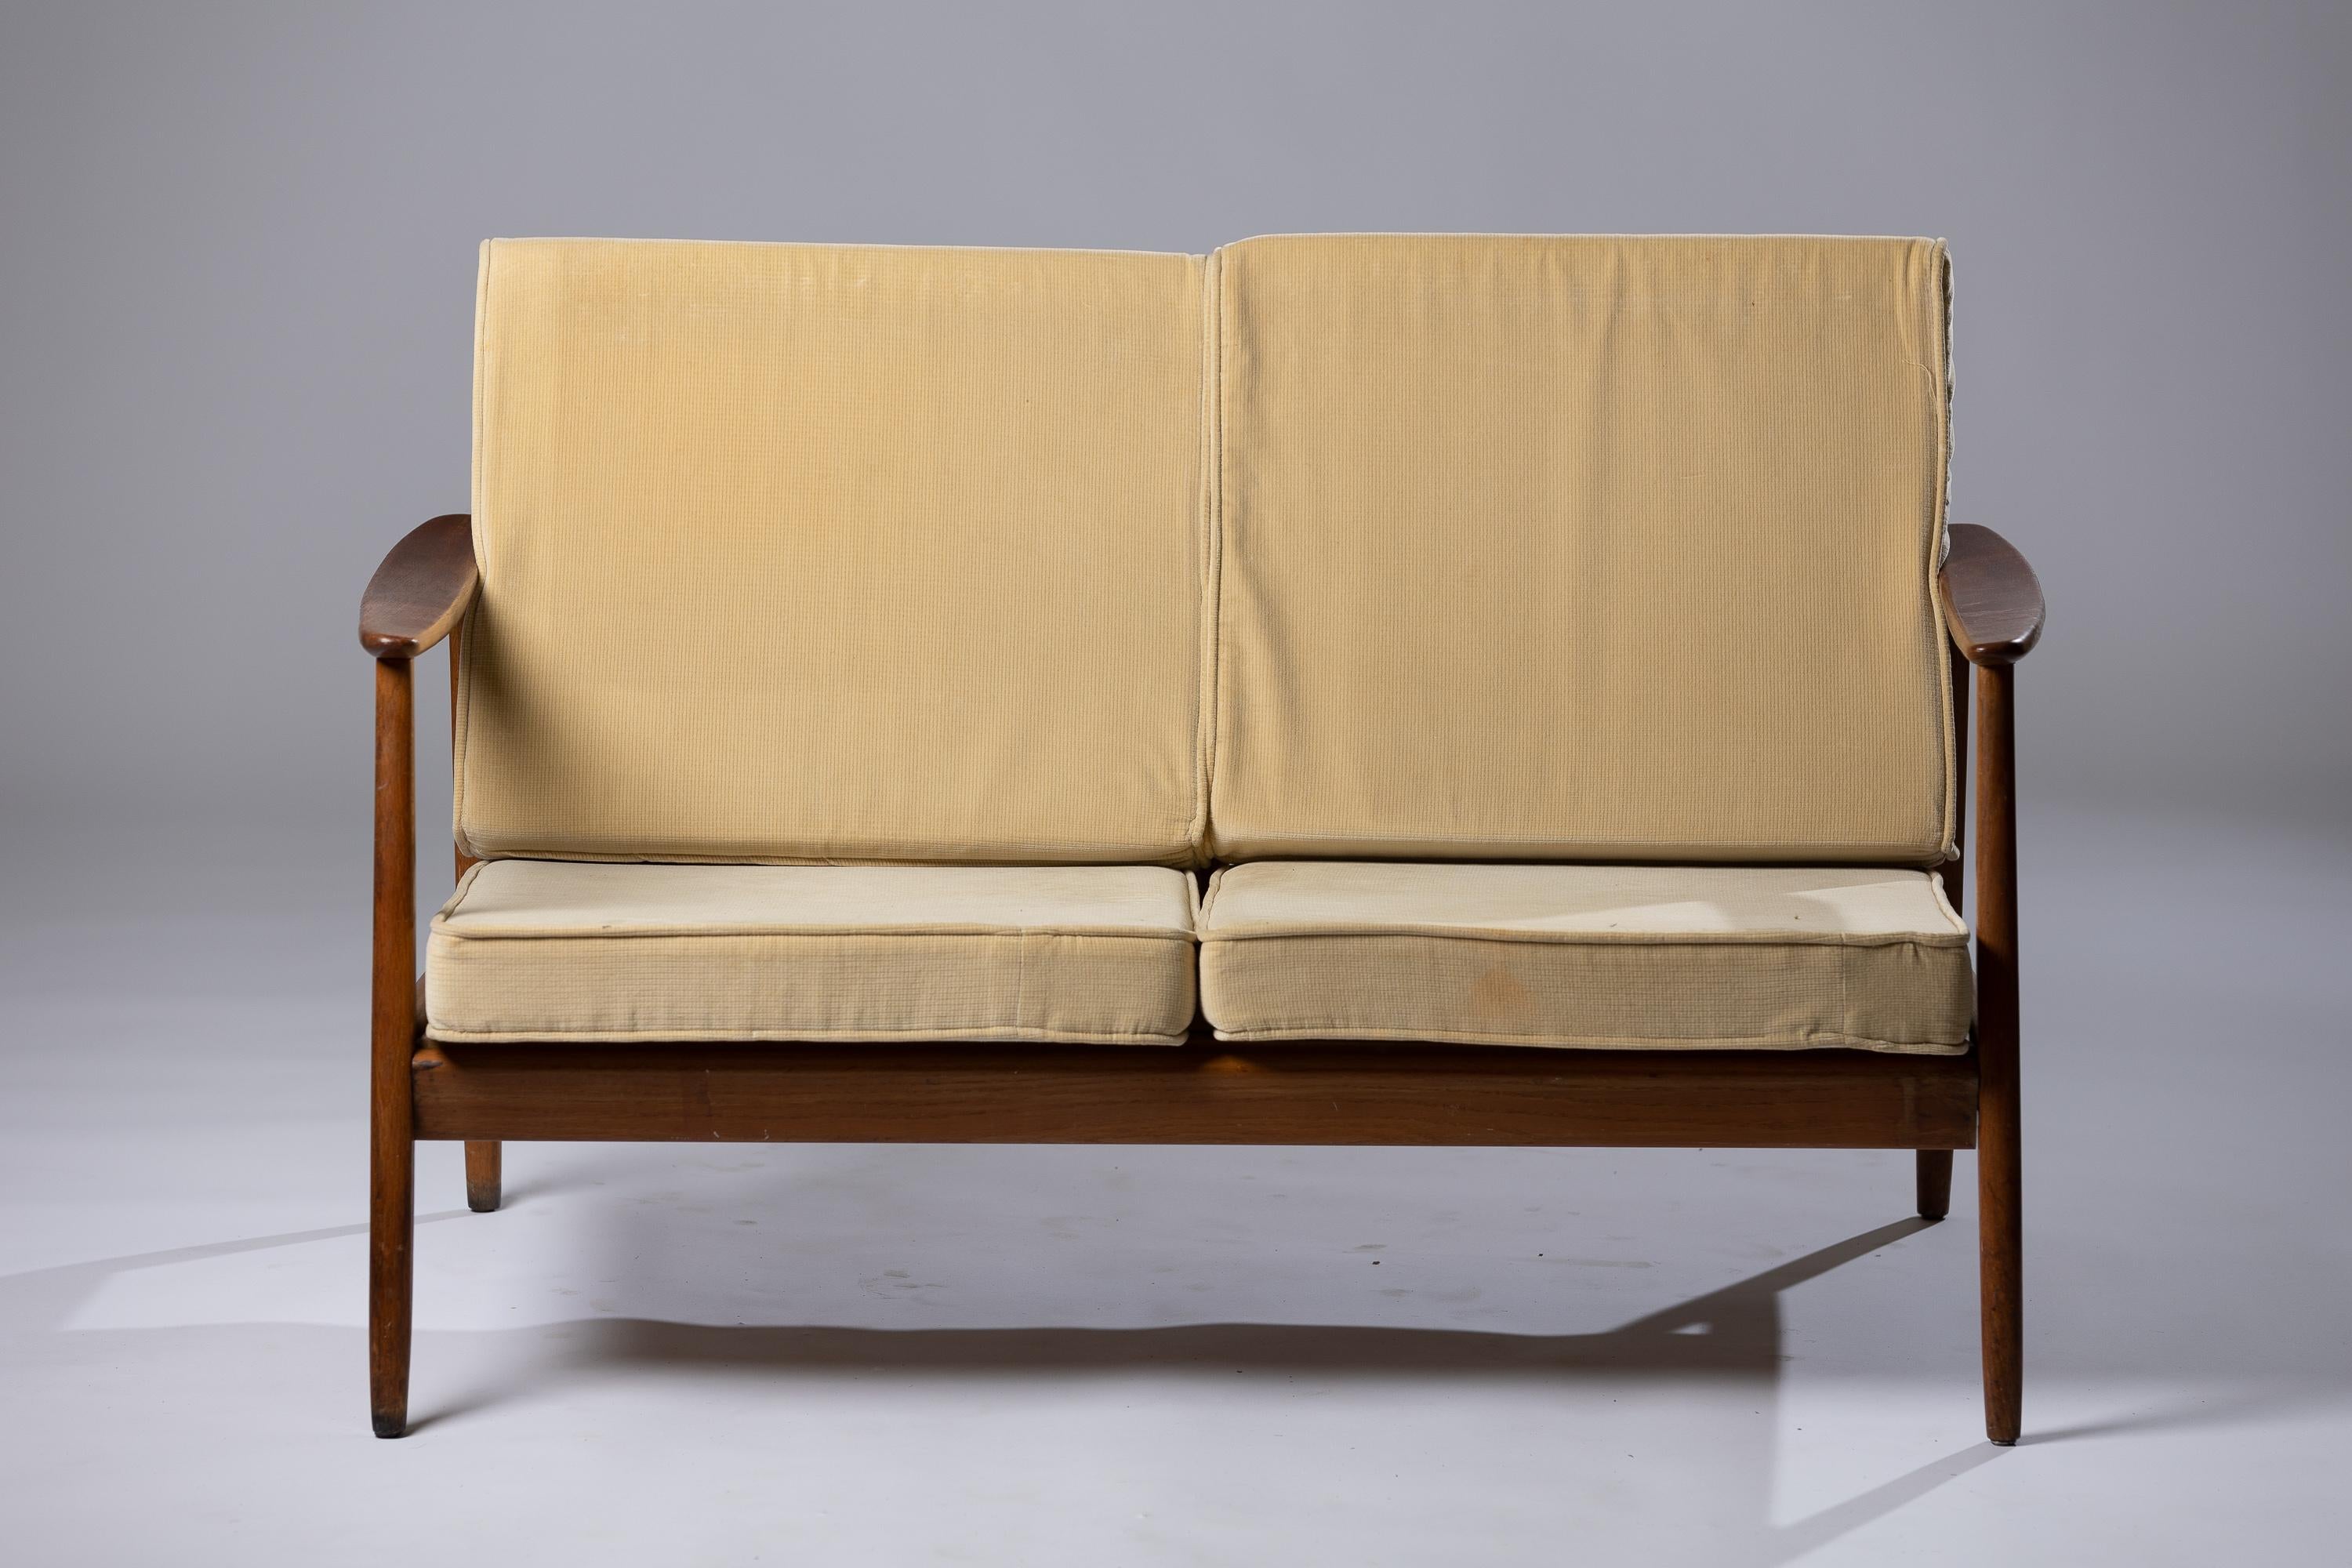 Swedish Scandinavian Modern Sofa from Folke Ohlsson in Rattan and Teak For Sale